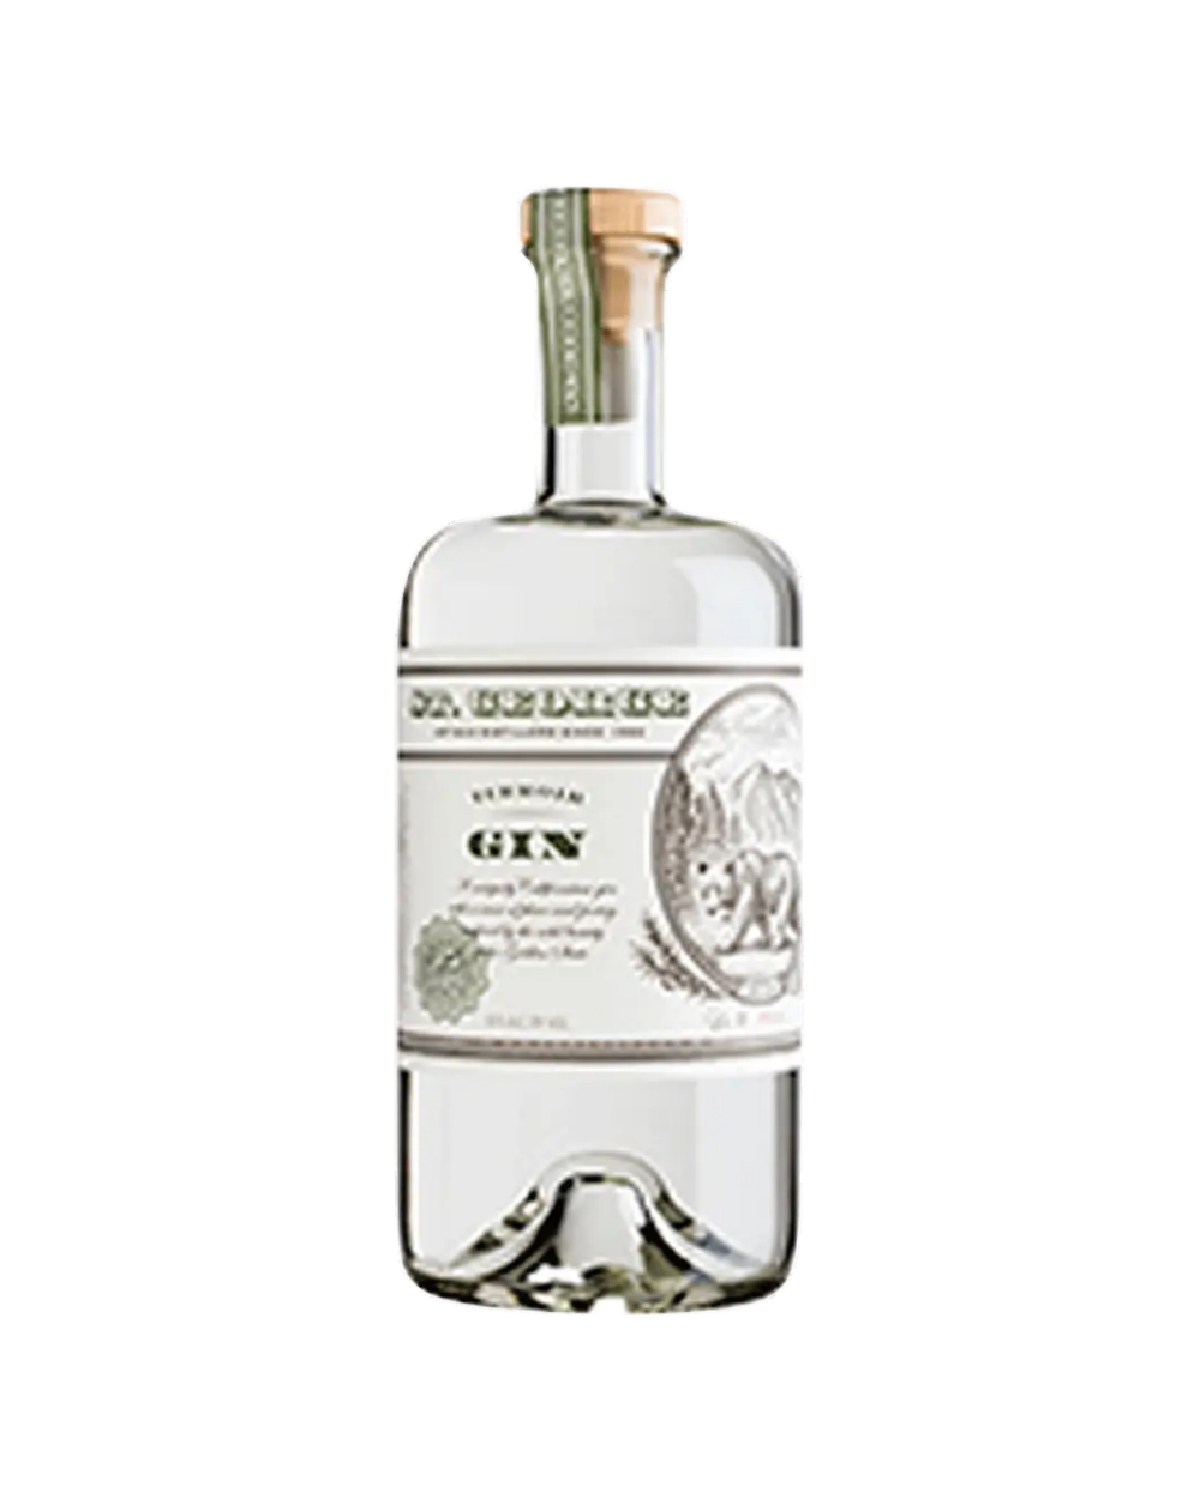 St. George Terroir gin 750ml